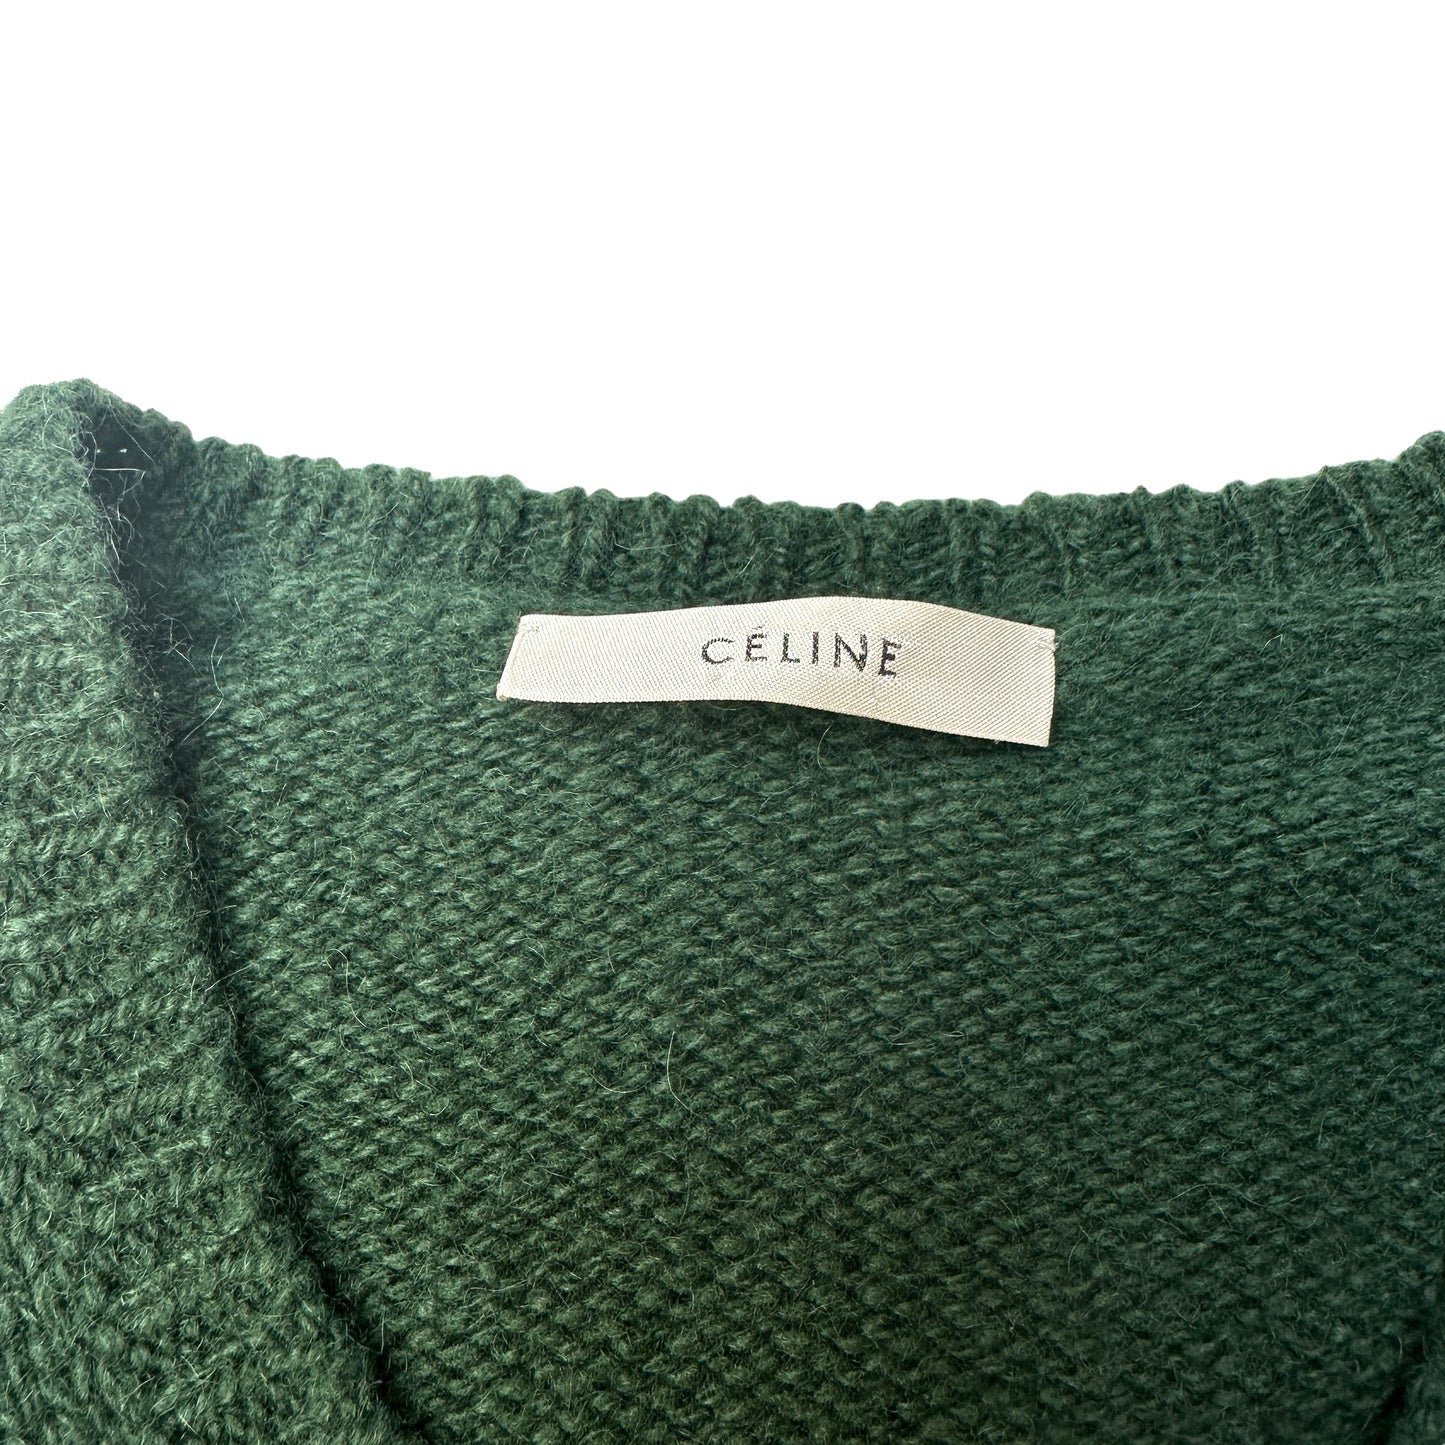 Colorblock Cashmere Sweater - M